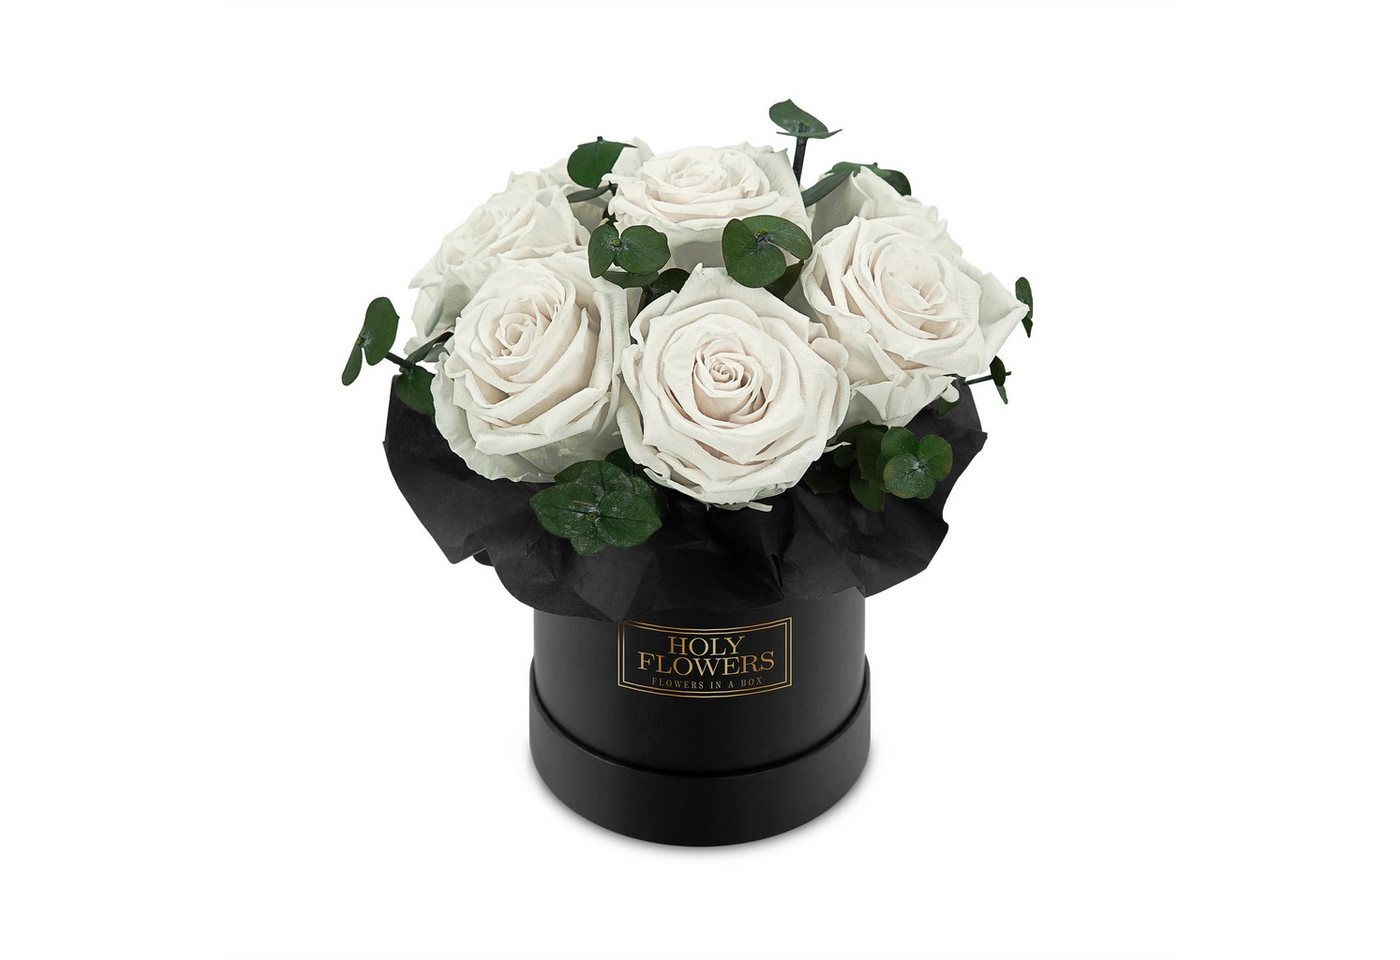 Kunstblume Rosenbox Bouquet mit 7-9 Infinity Rosen Eukalyptus, 1- 3 Jahre haltbar Infinity Rose, Holy Flowers, Höhe 18 cm von Holy Flowers